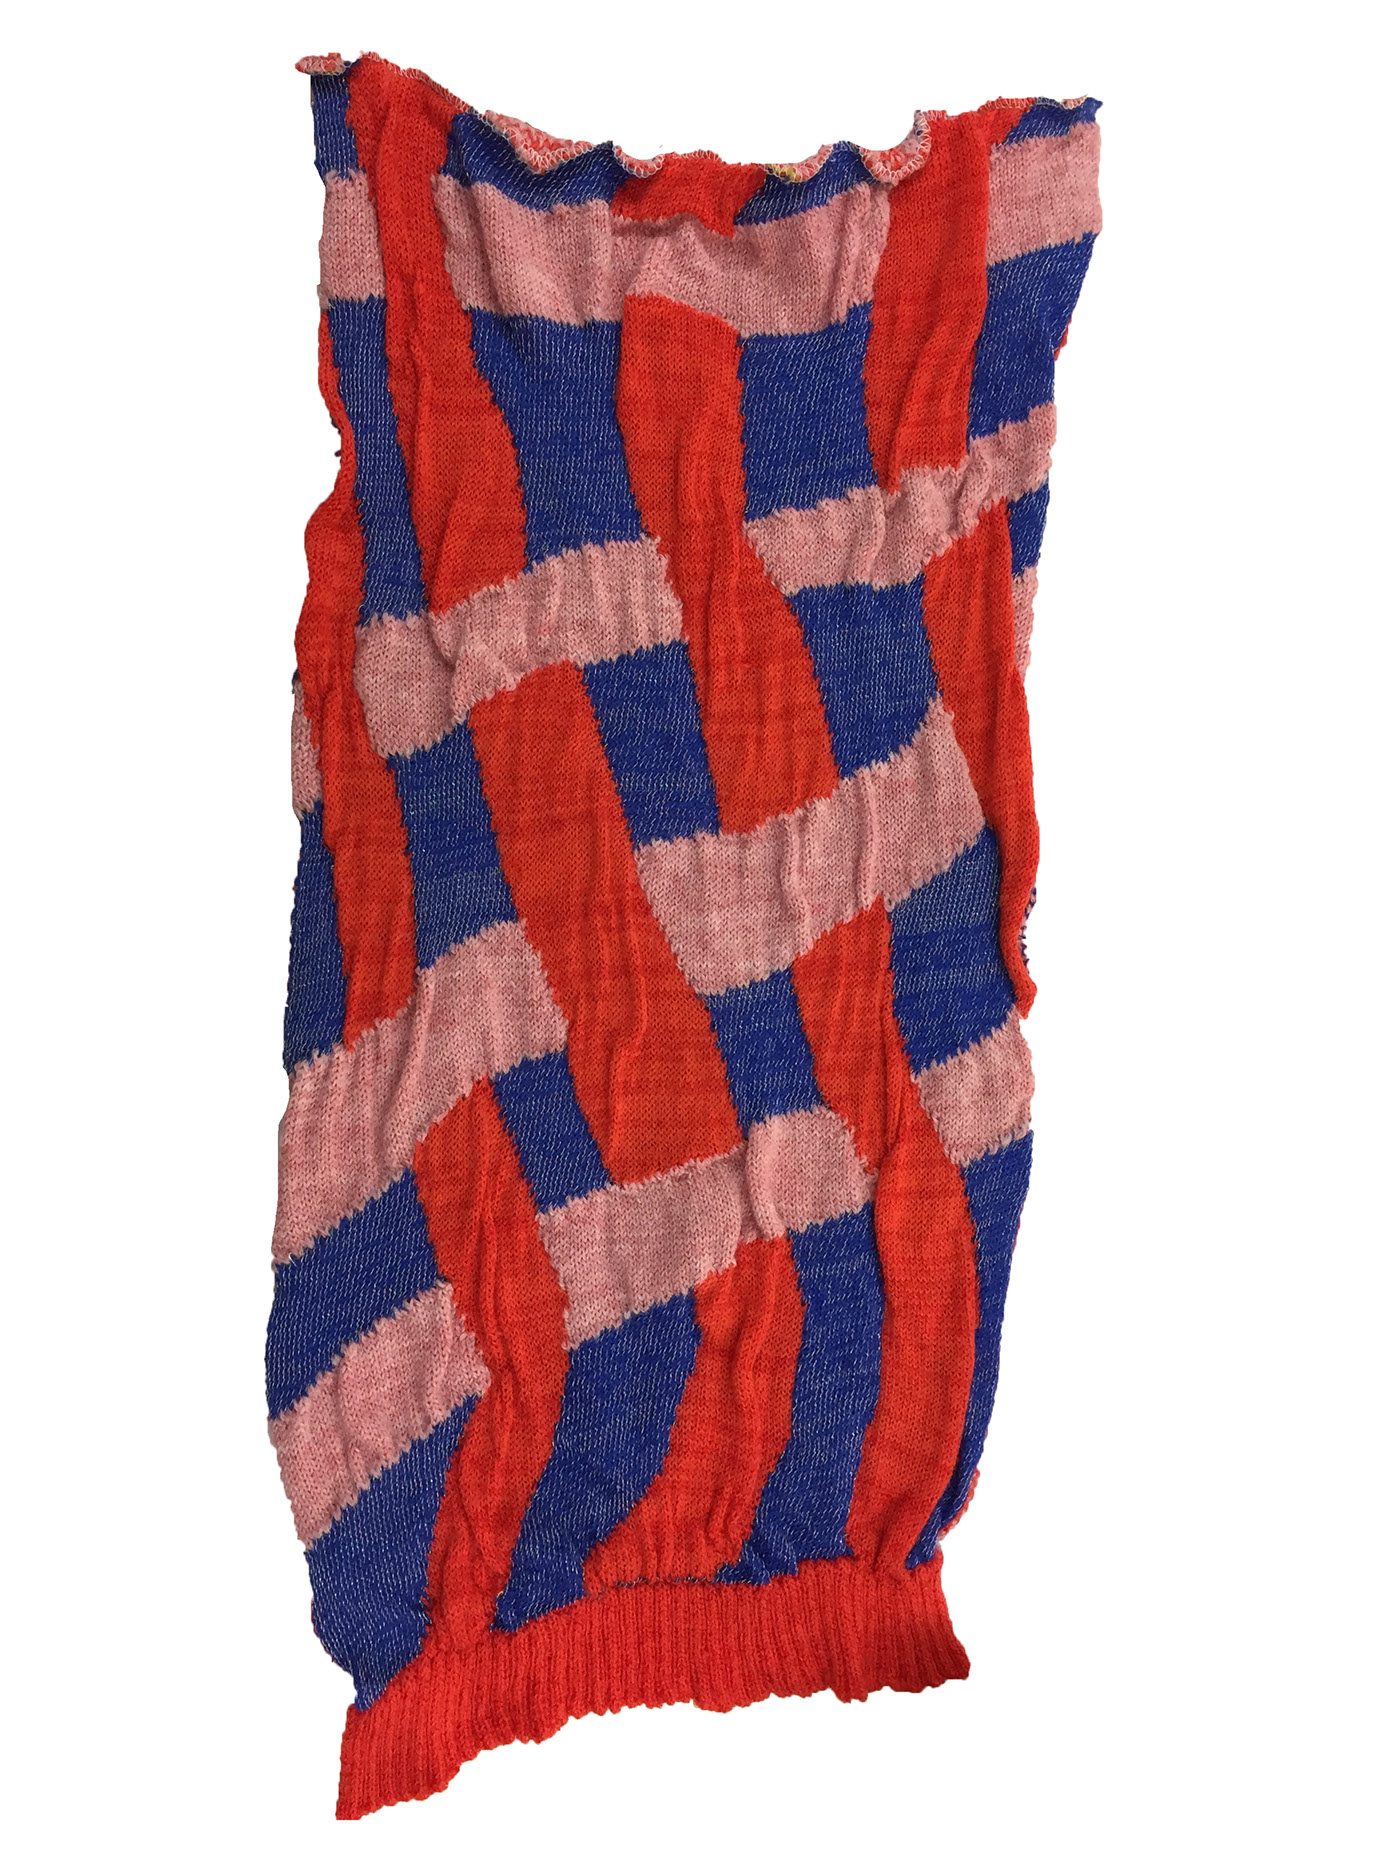 knit joke humor textile fabric design knitwear Stoll Industrial Knit